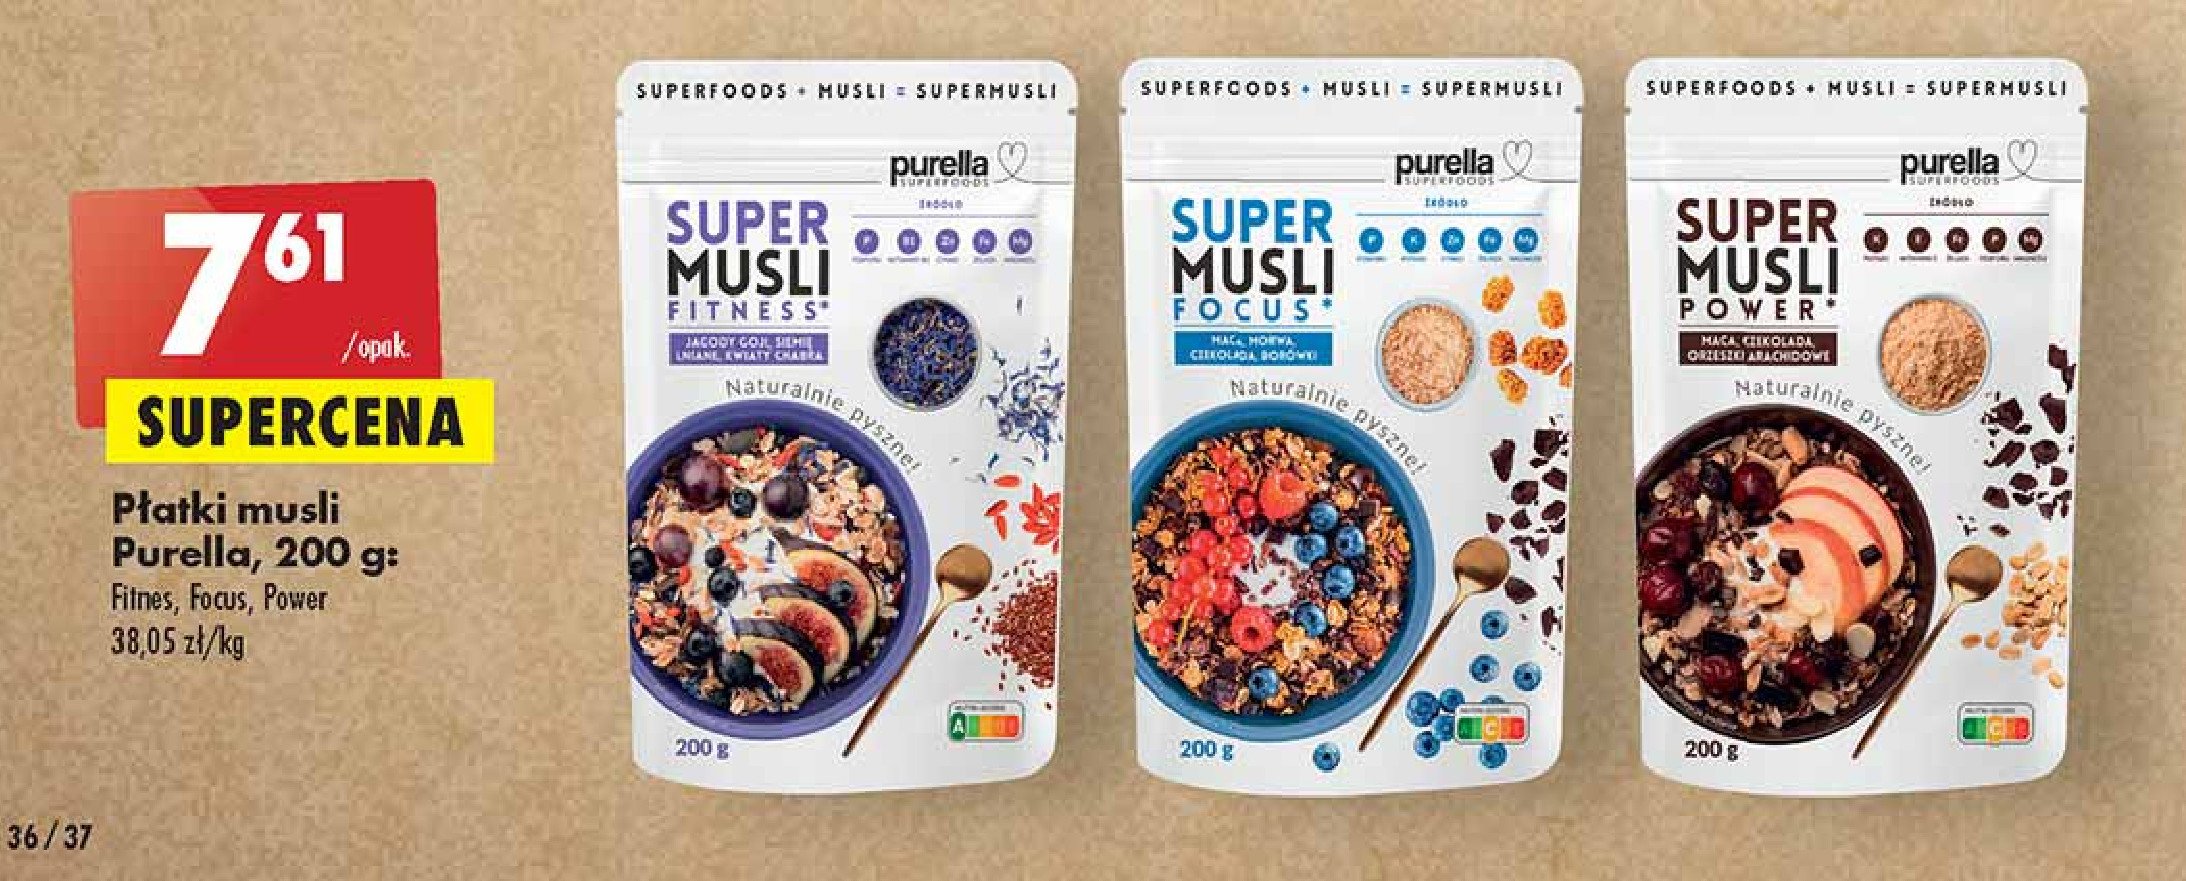 Musli power Purella super musli Purella food promocja